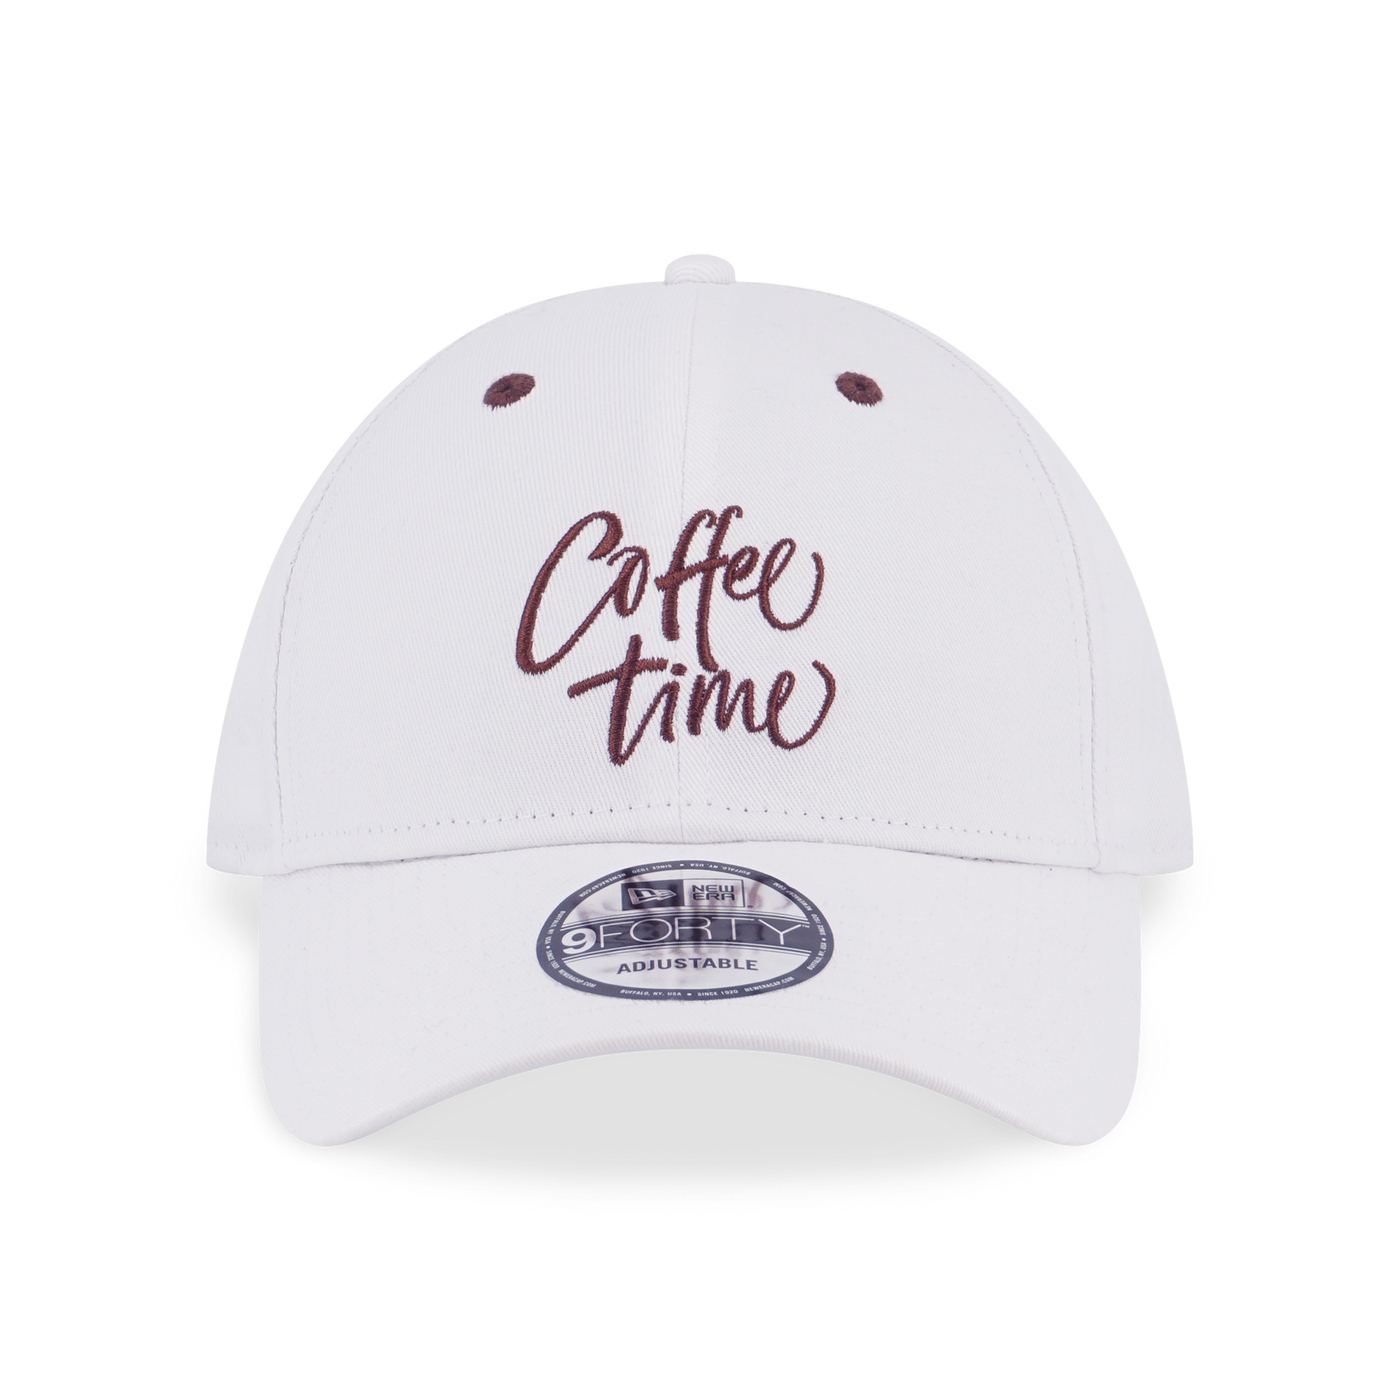 NEW ERA MORNING CLUB-COFFEE WHITE 9FORTY CAP